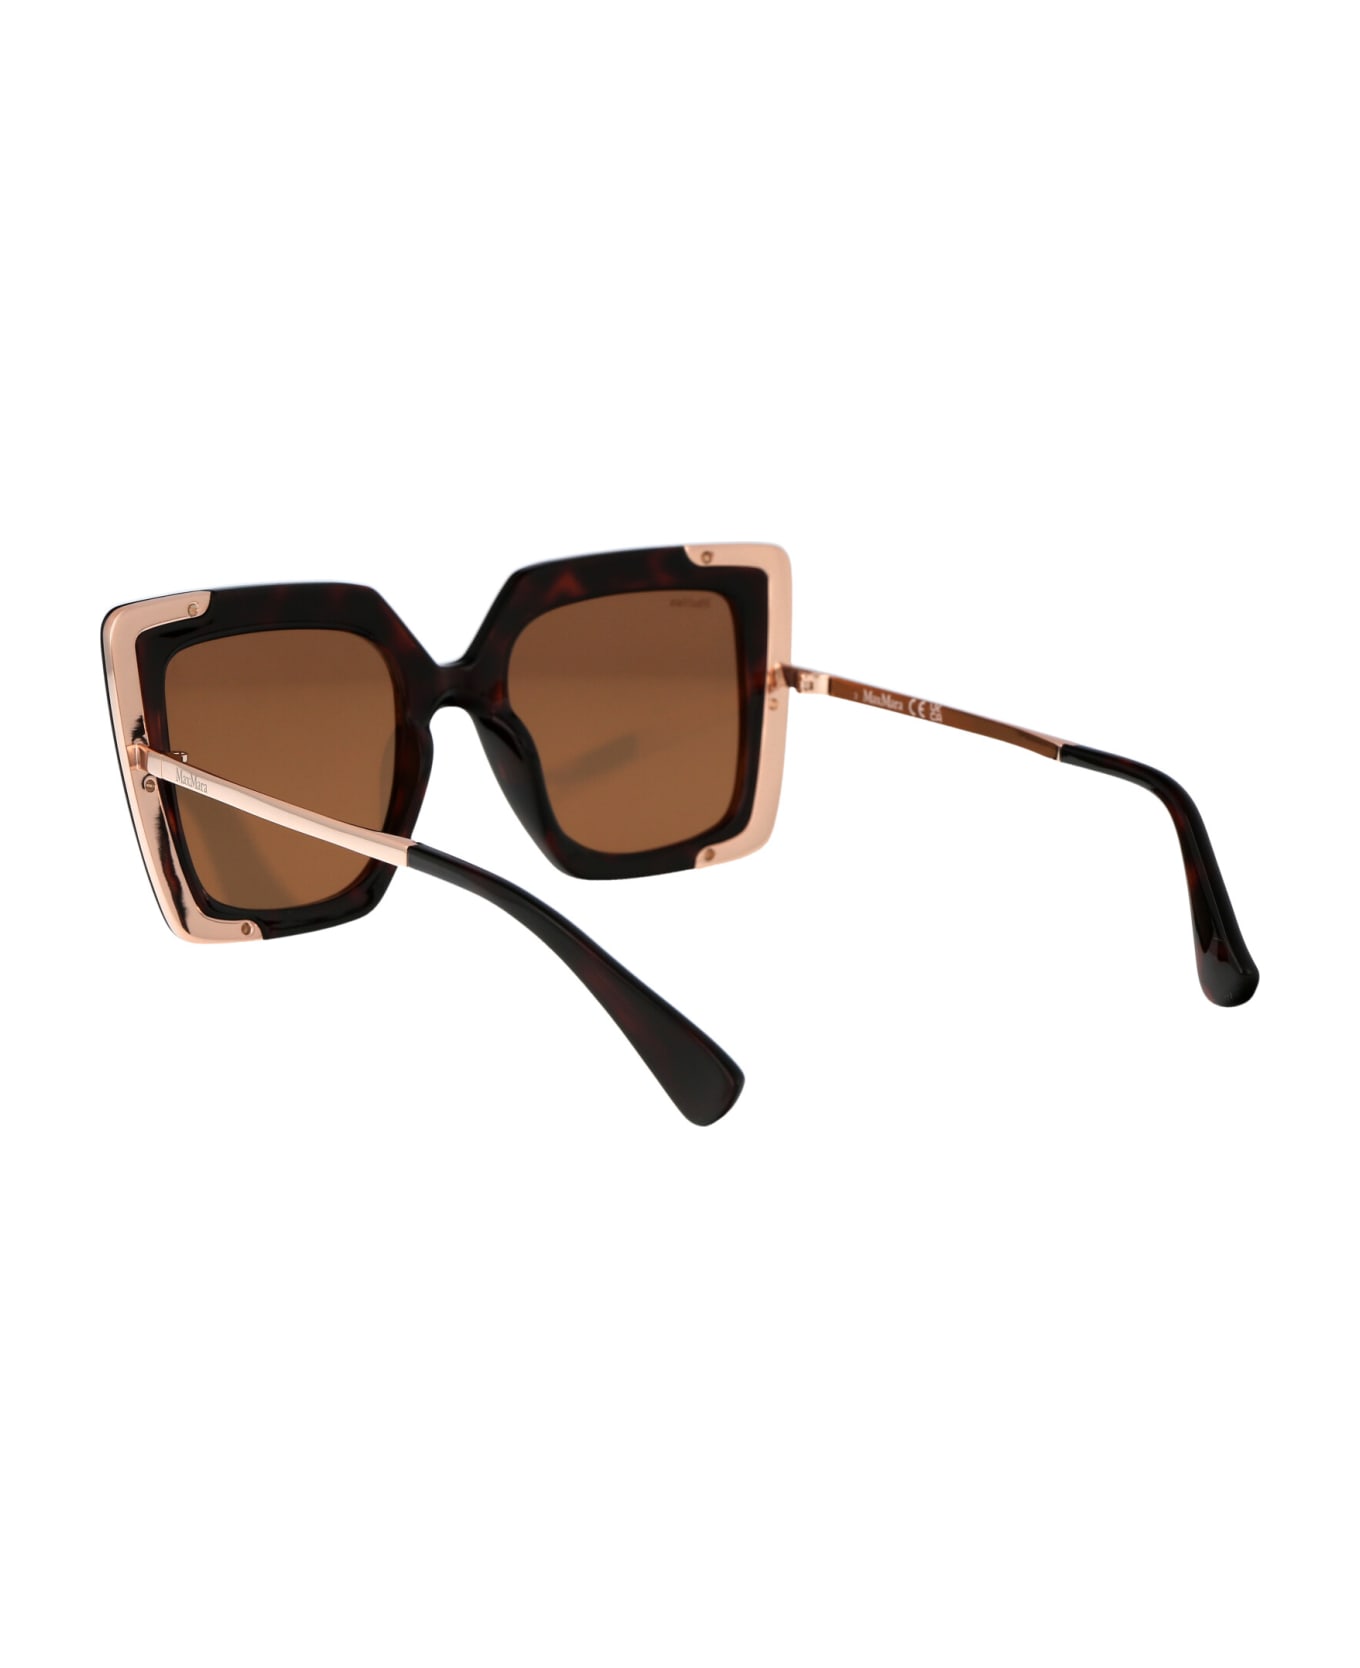 Max Mara Design4 Sunglasses - 54S Avana Rossa/Bordeaux サングラス